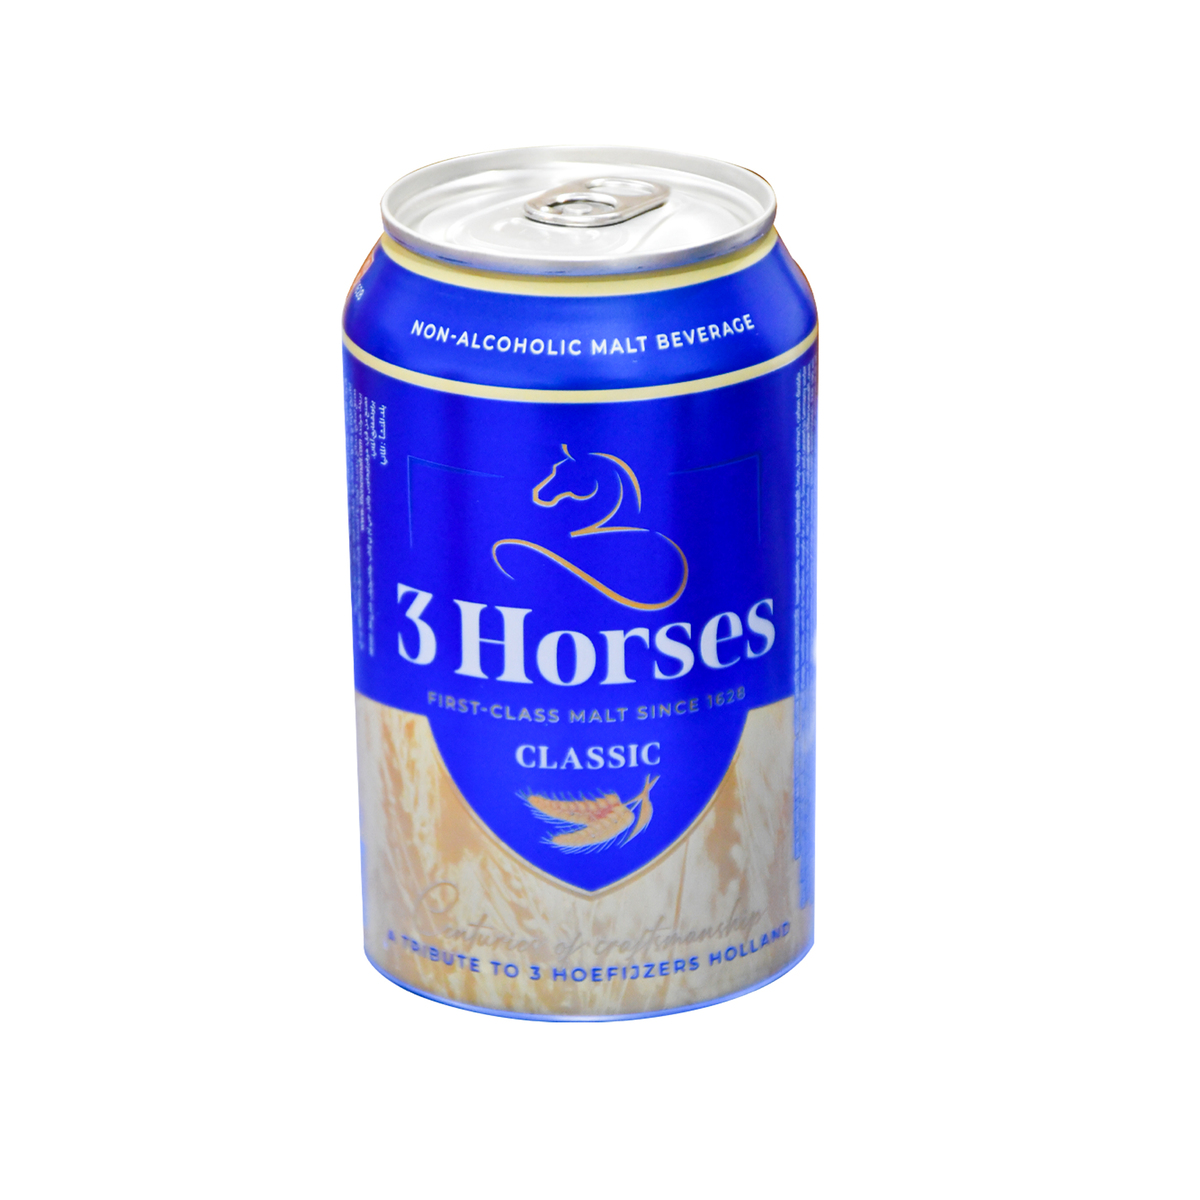 3 Horses Non-Alcoholic Malt Beverages 330ml x 6 Pieces